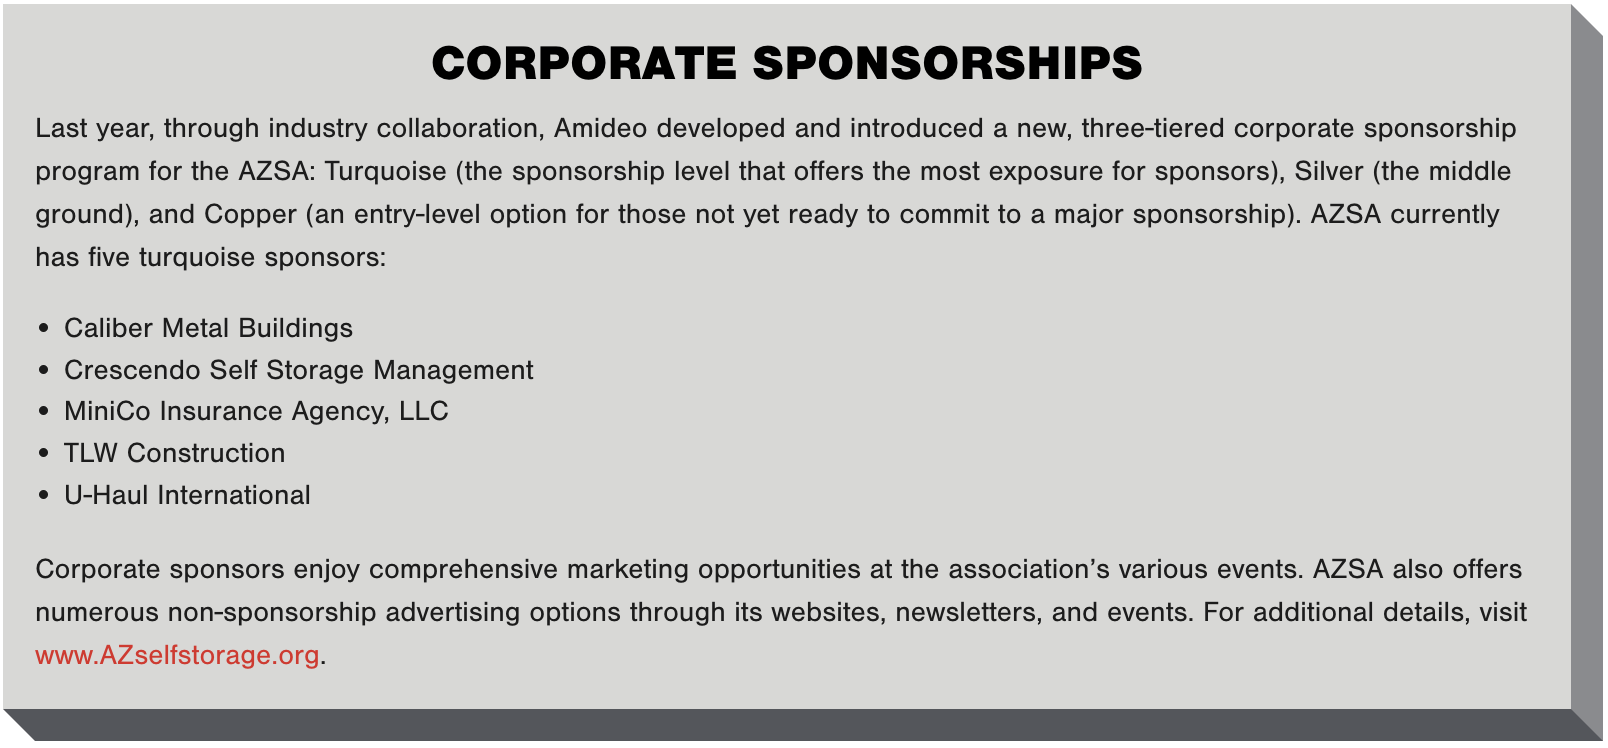 AZSA Corporate Sponsorships